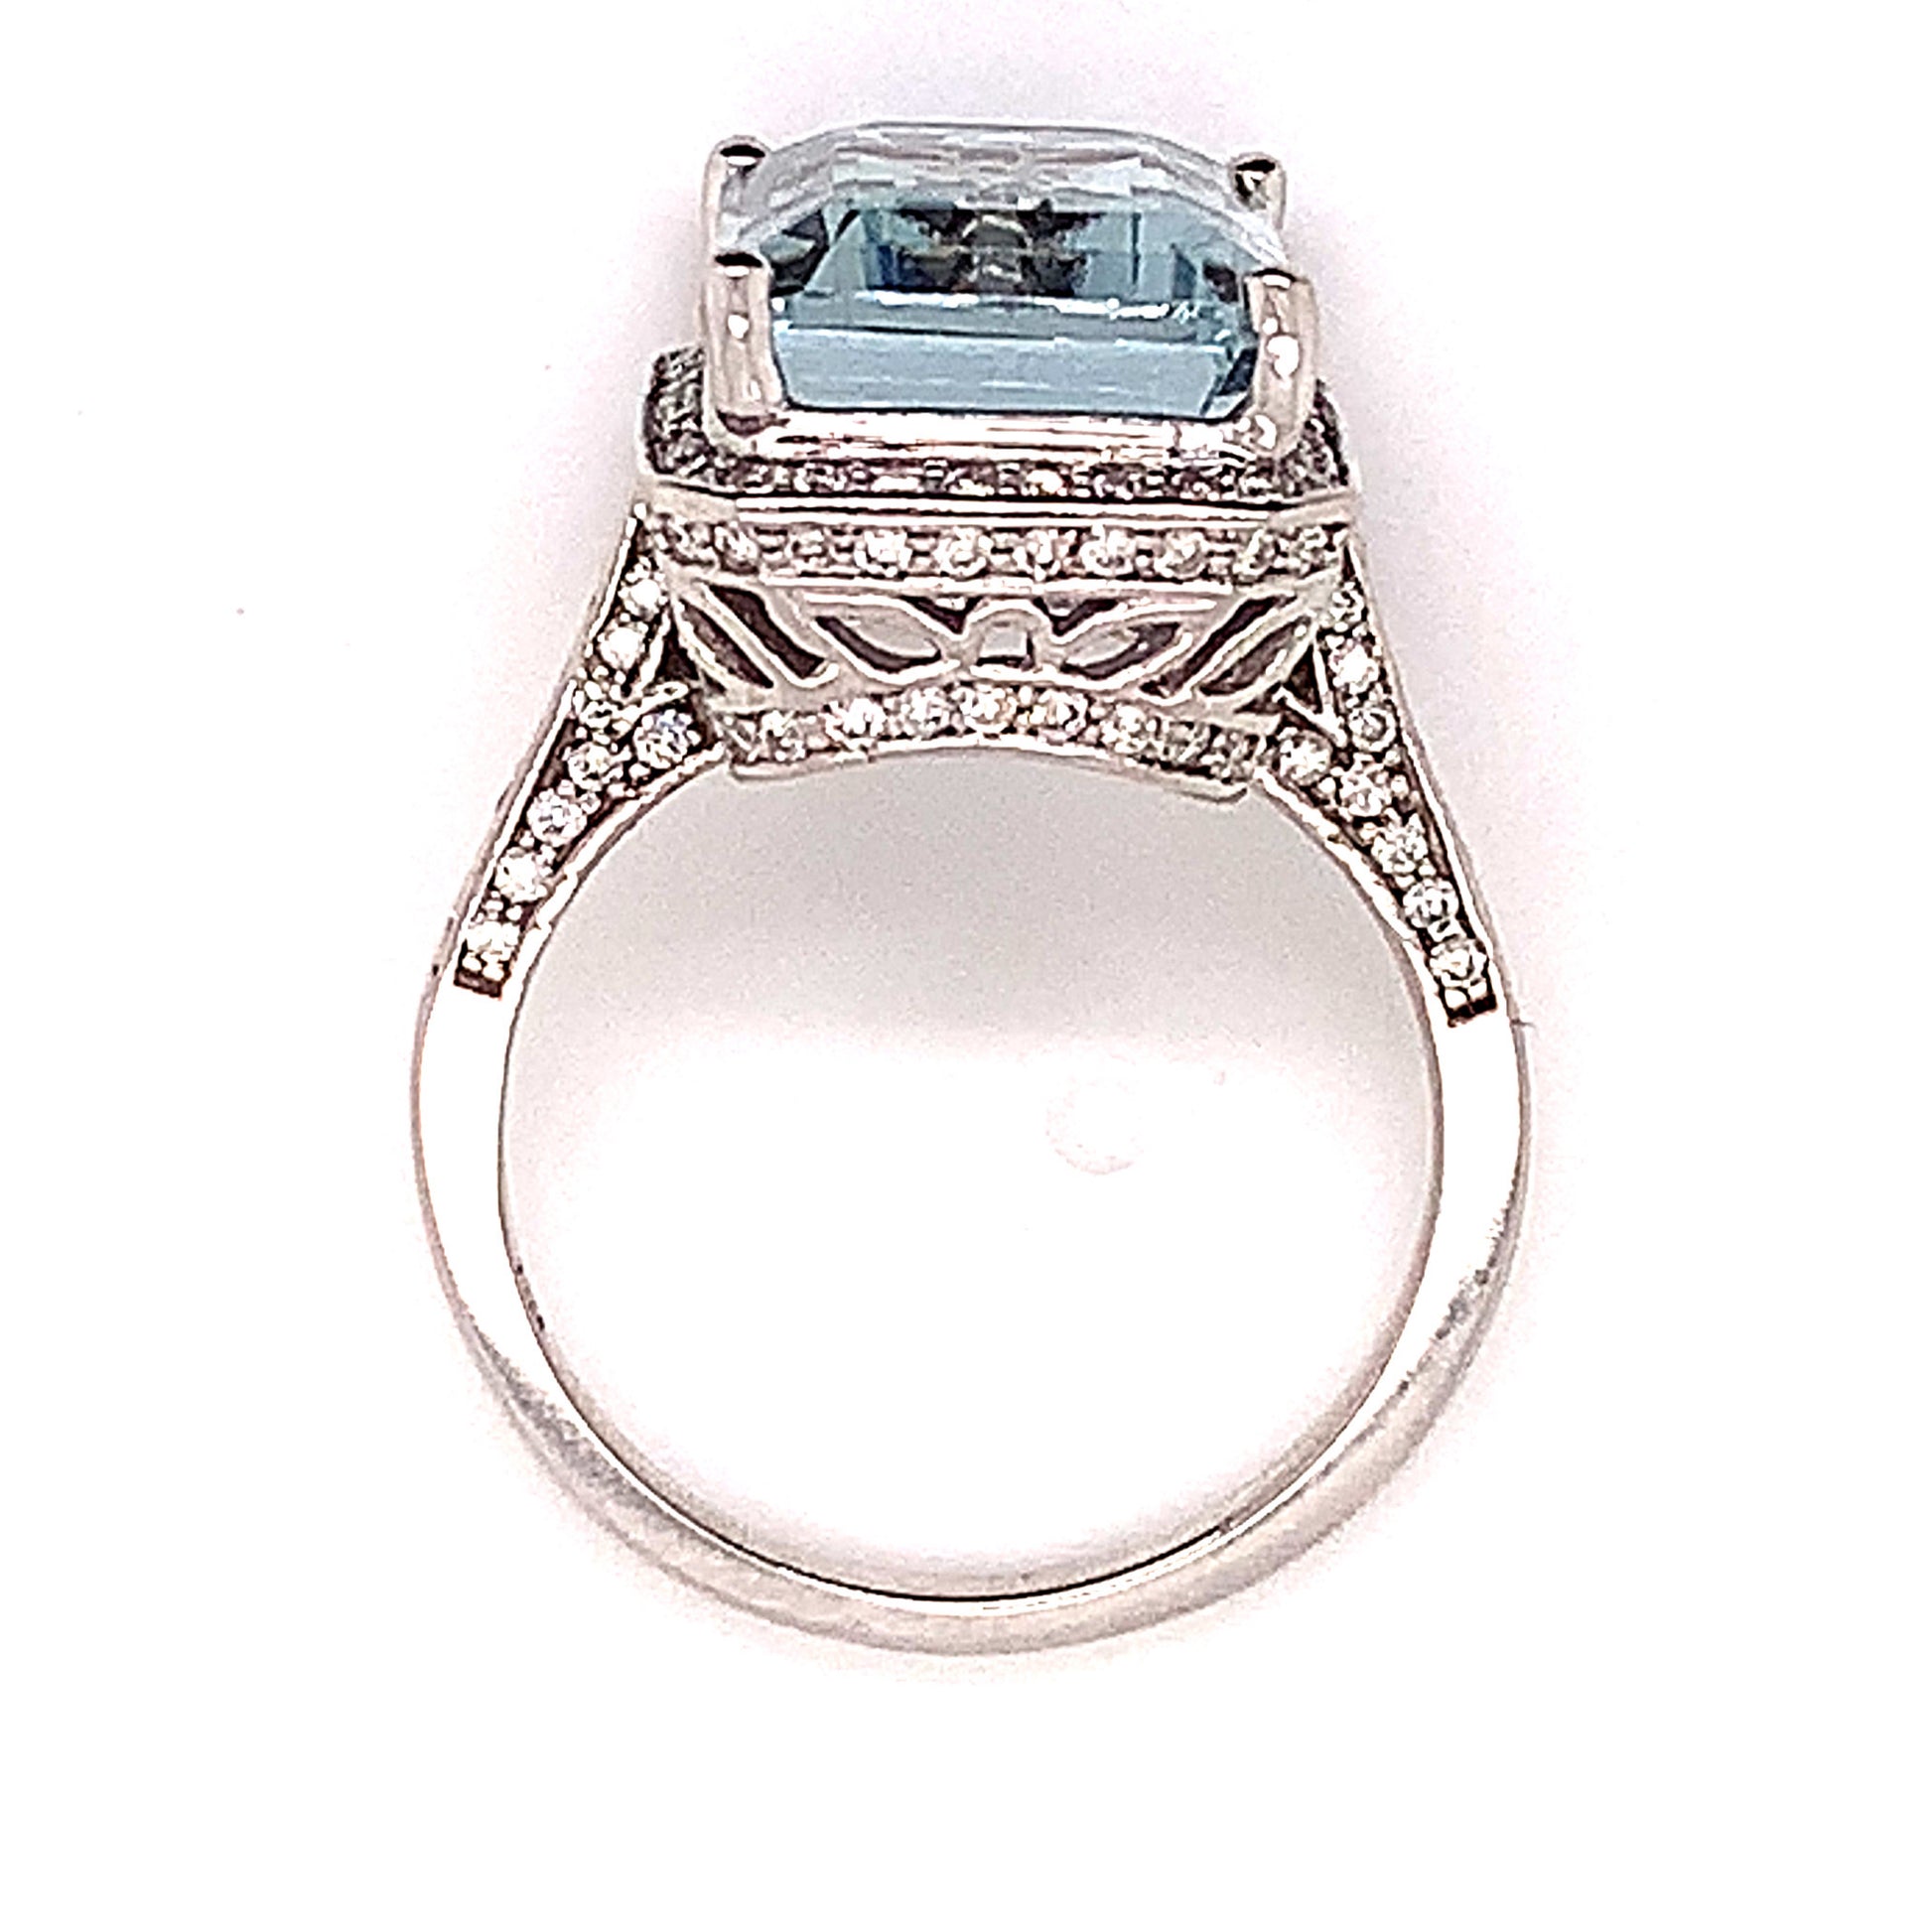 Diamond Aquamarine Ring Size 6.75 14k Gold 6.25 TCW Certified $5,950 120671 - Certified Estate Jewelry